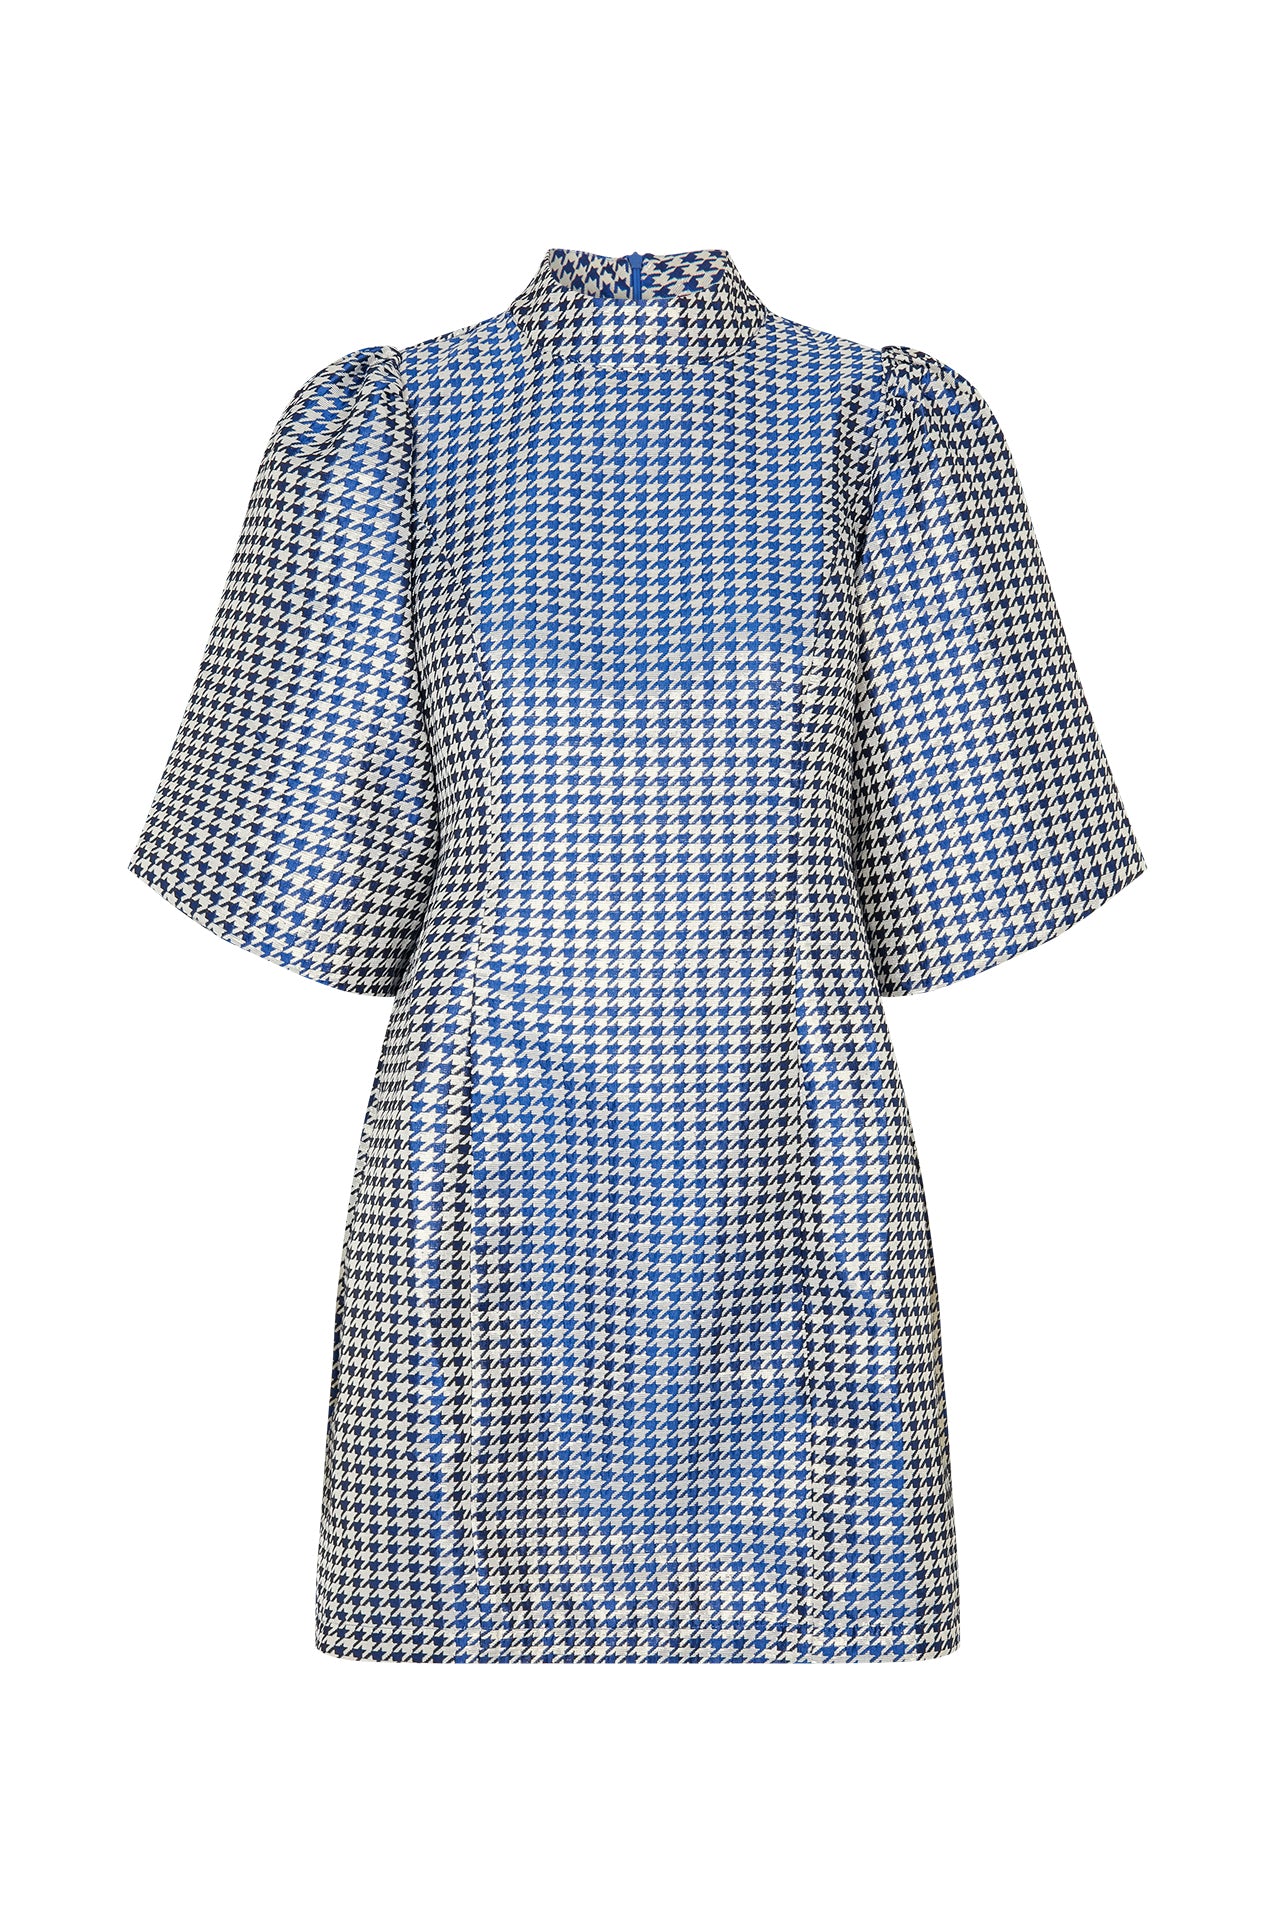 Lollys Laundry LausanneLL Short Dress SS Dress 79 Check Print